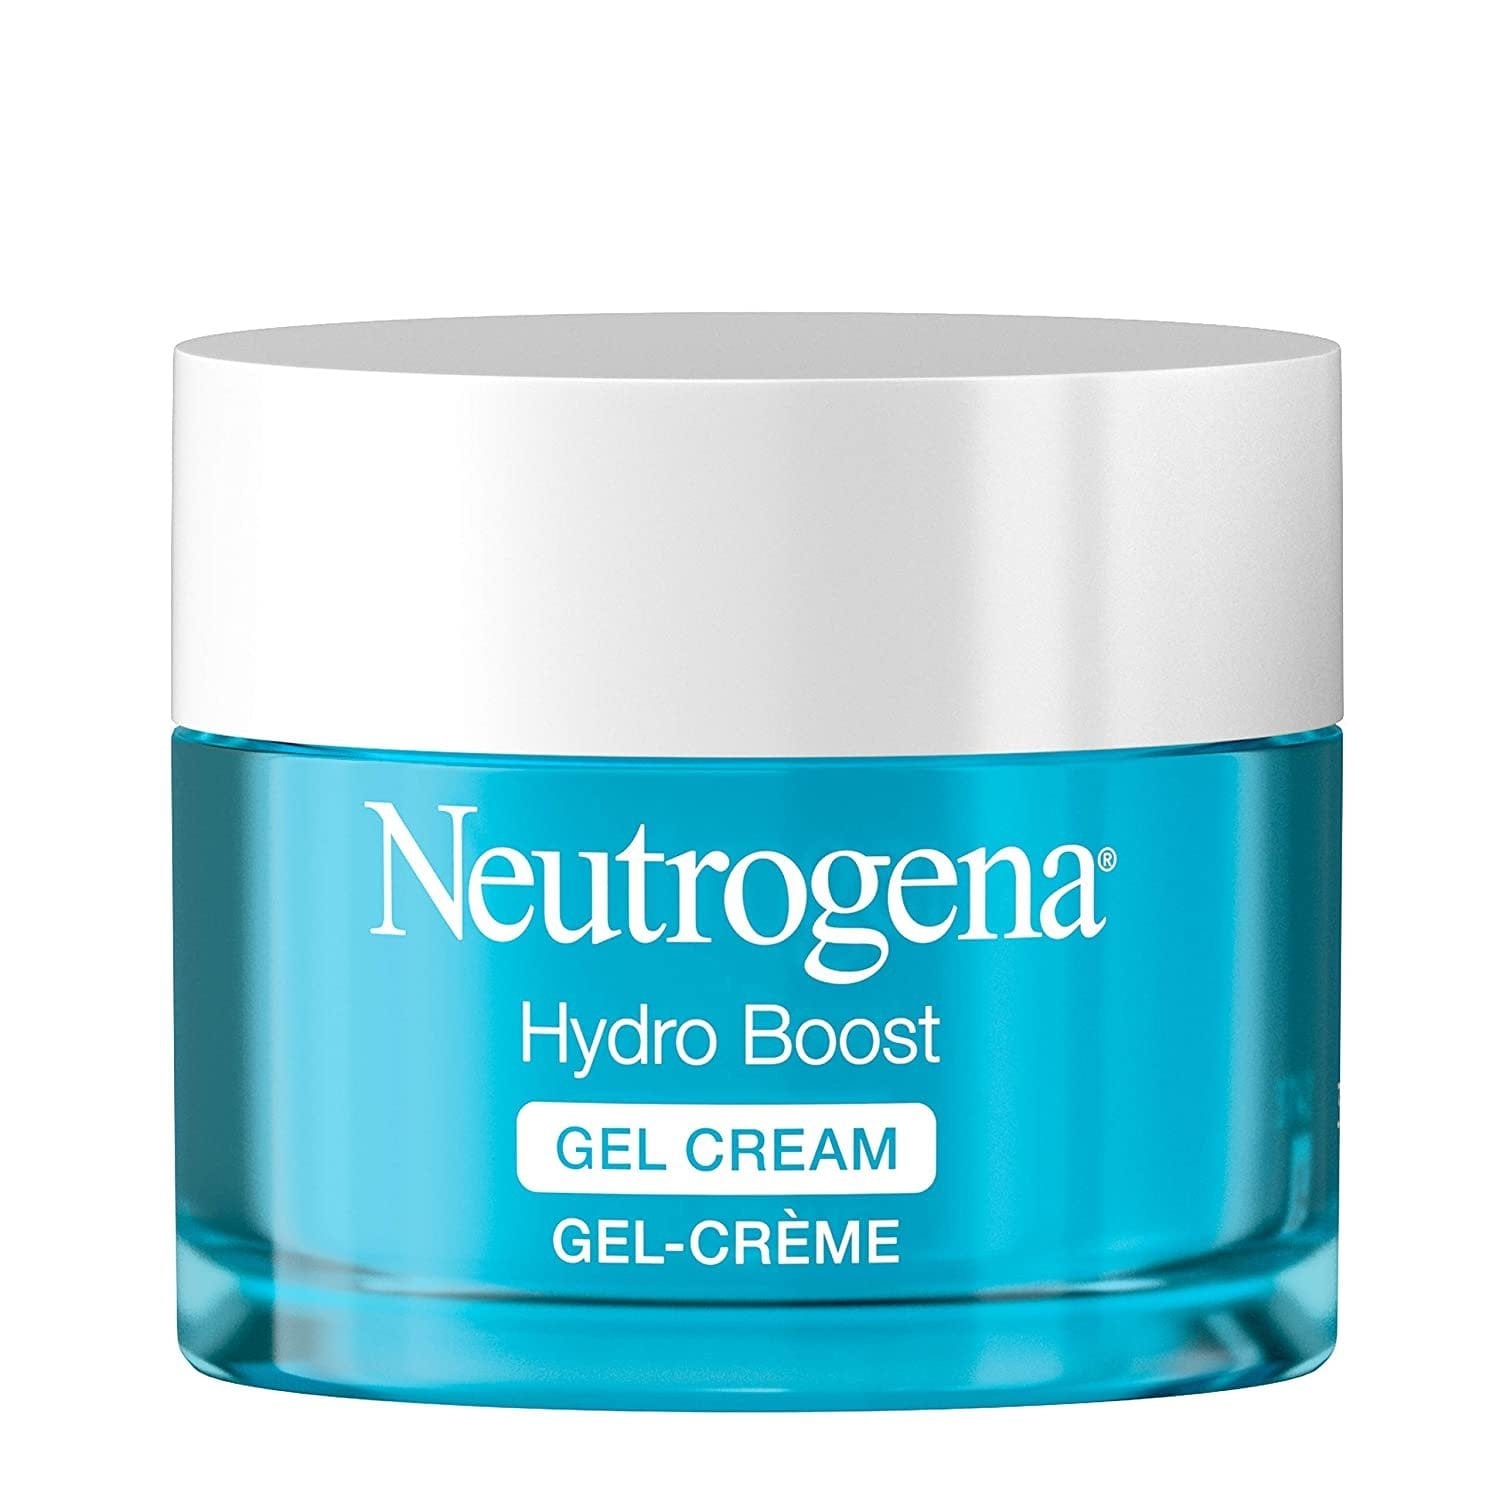 Neutrogena Health and Beauty Neutrogena Hydro Boost Gel Cream Moisturiser, 50 ml